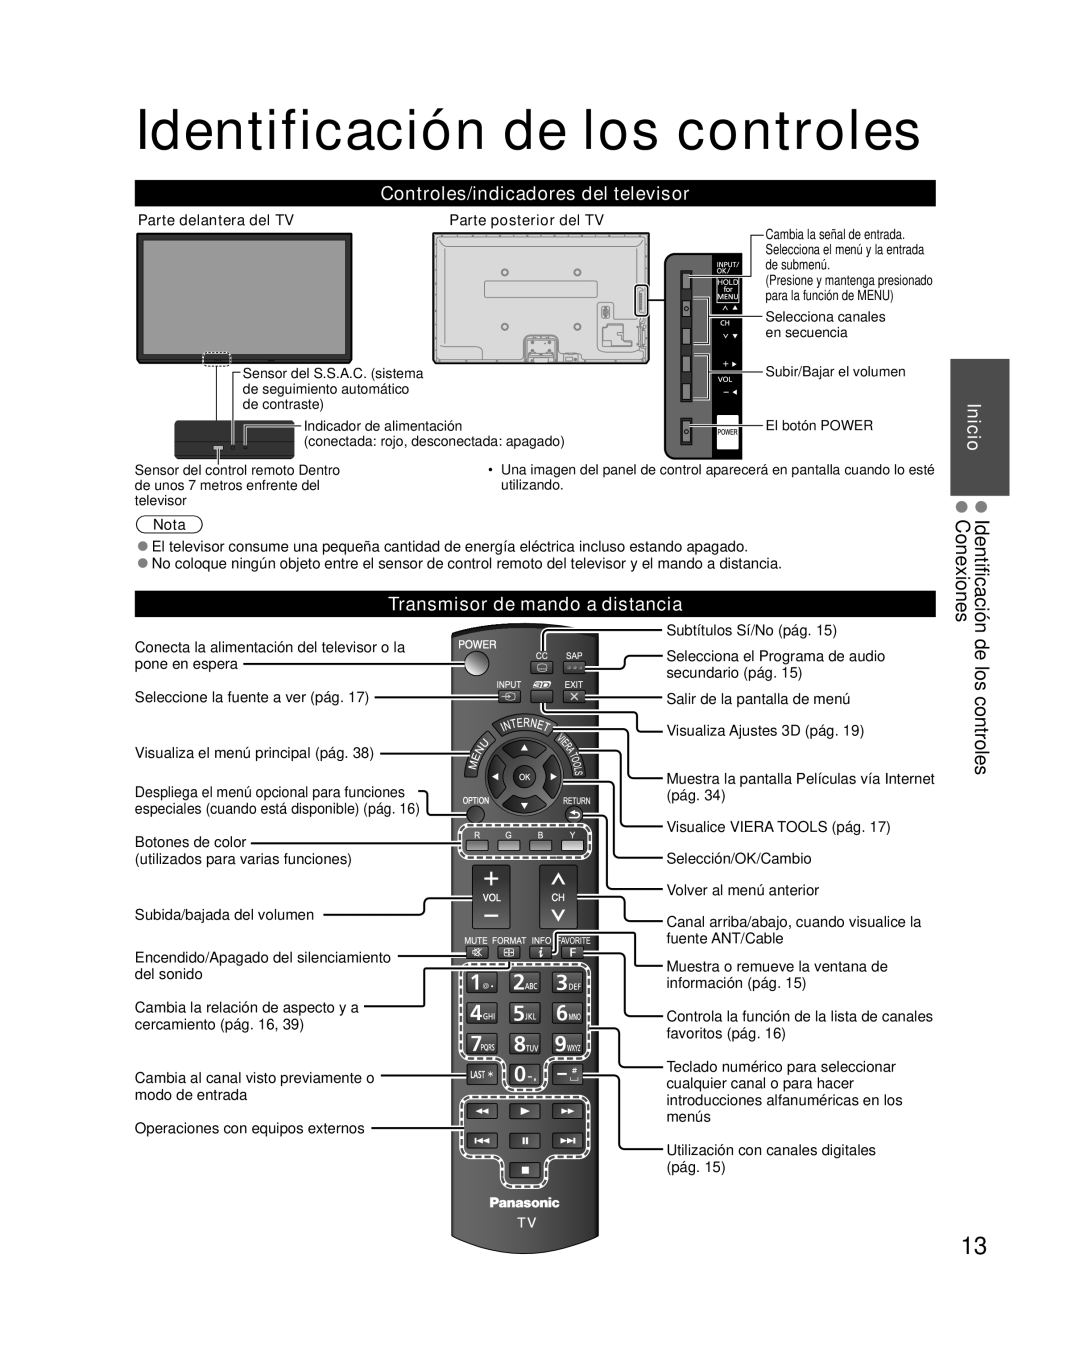 Panasonic TC-P50XT50 Identificación de los controles, Controles/indicadores del televisor, Transmisor de mando a distancia 